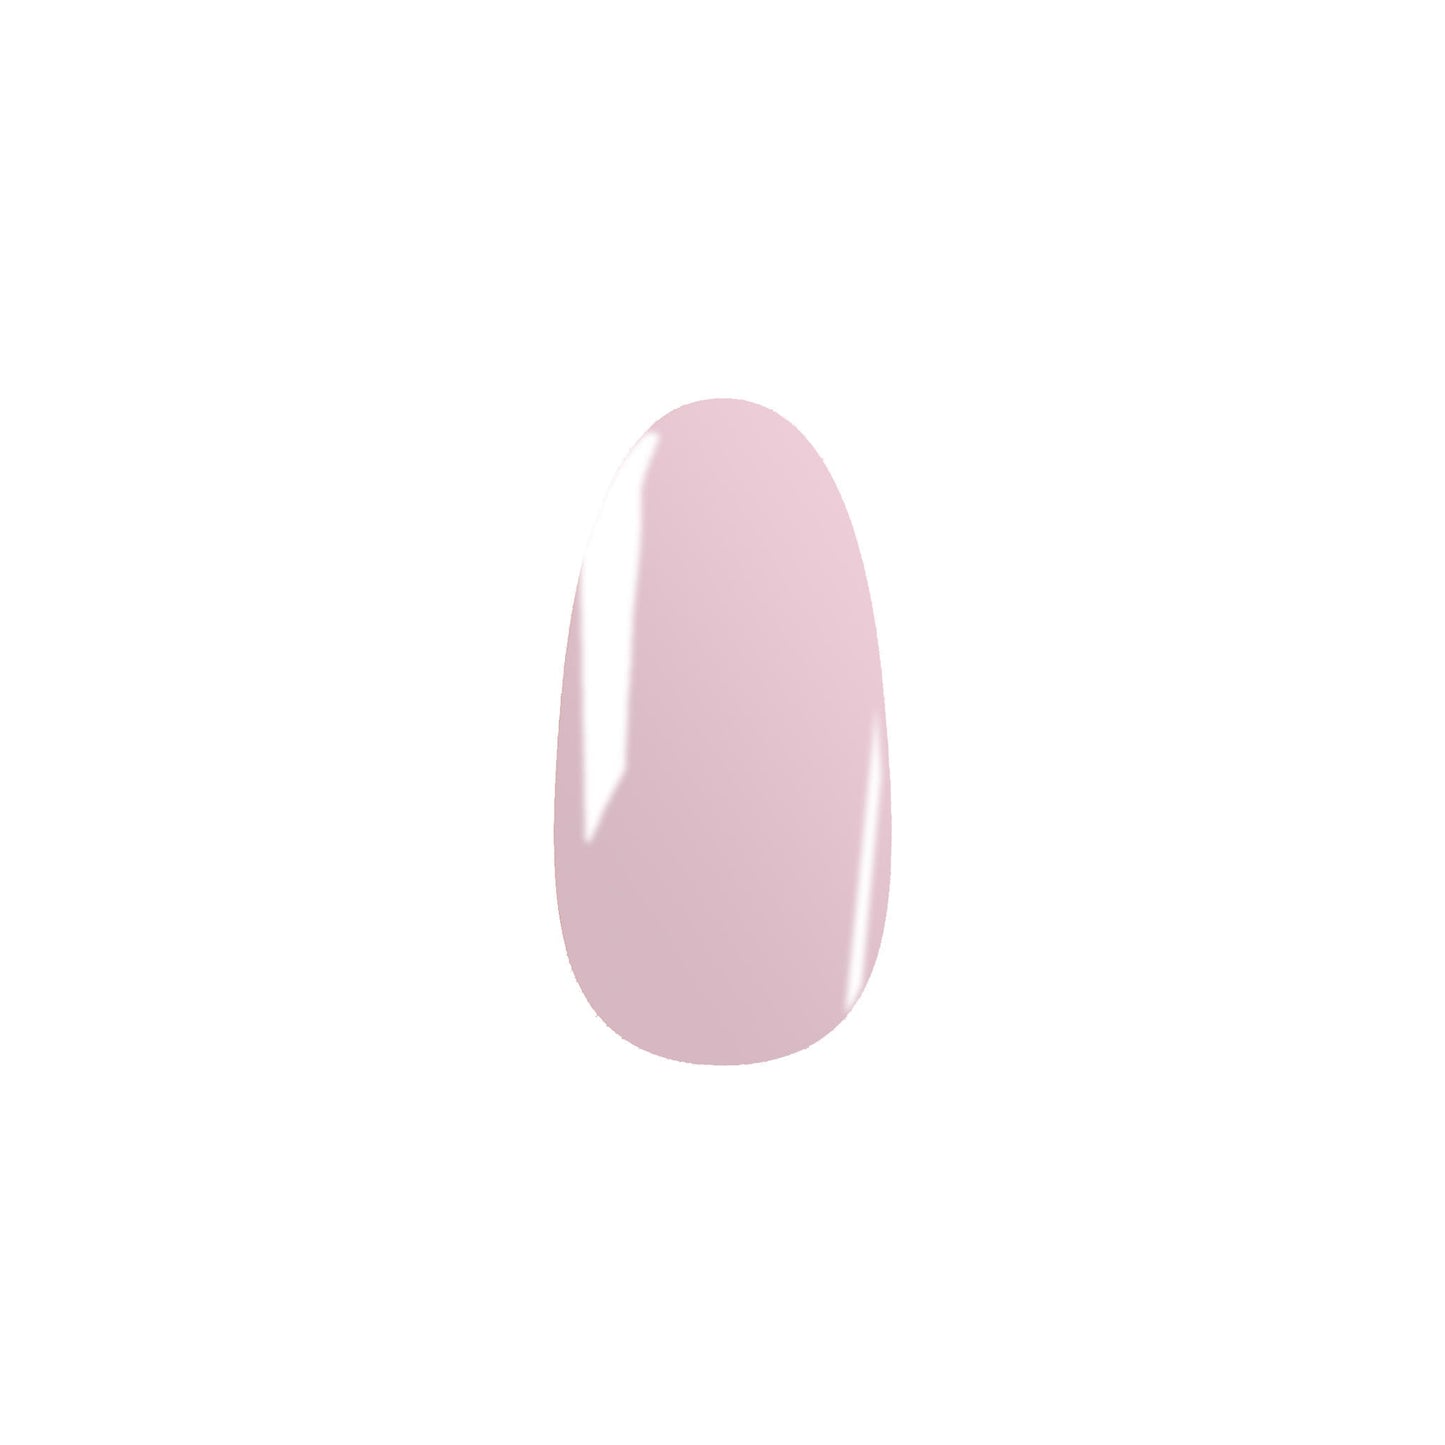 Pale Bubblegum Pink HEMA-Free Gel Nail Polish